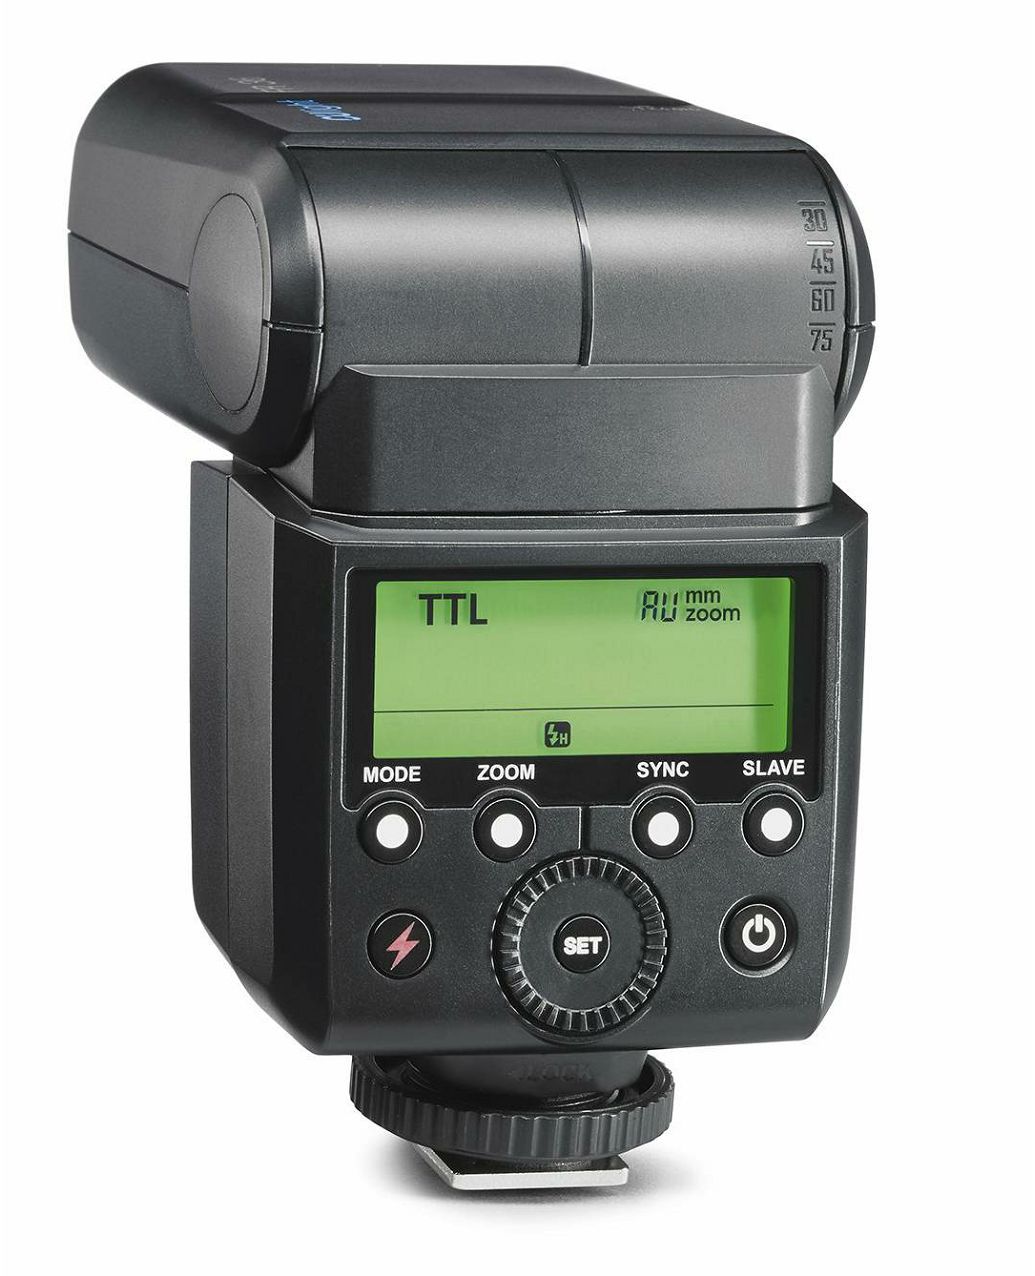 Cullmann CUlight FR 36S ADI-TTL HSS Flash unit bljeskalica za Sony (61130)